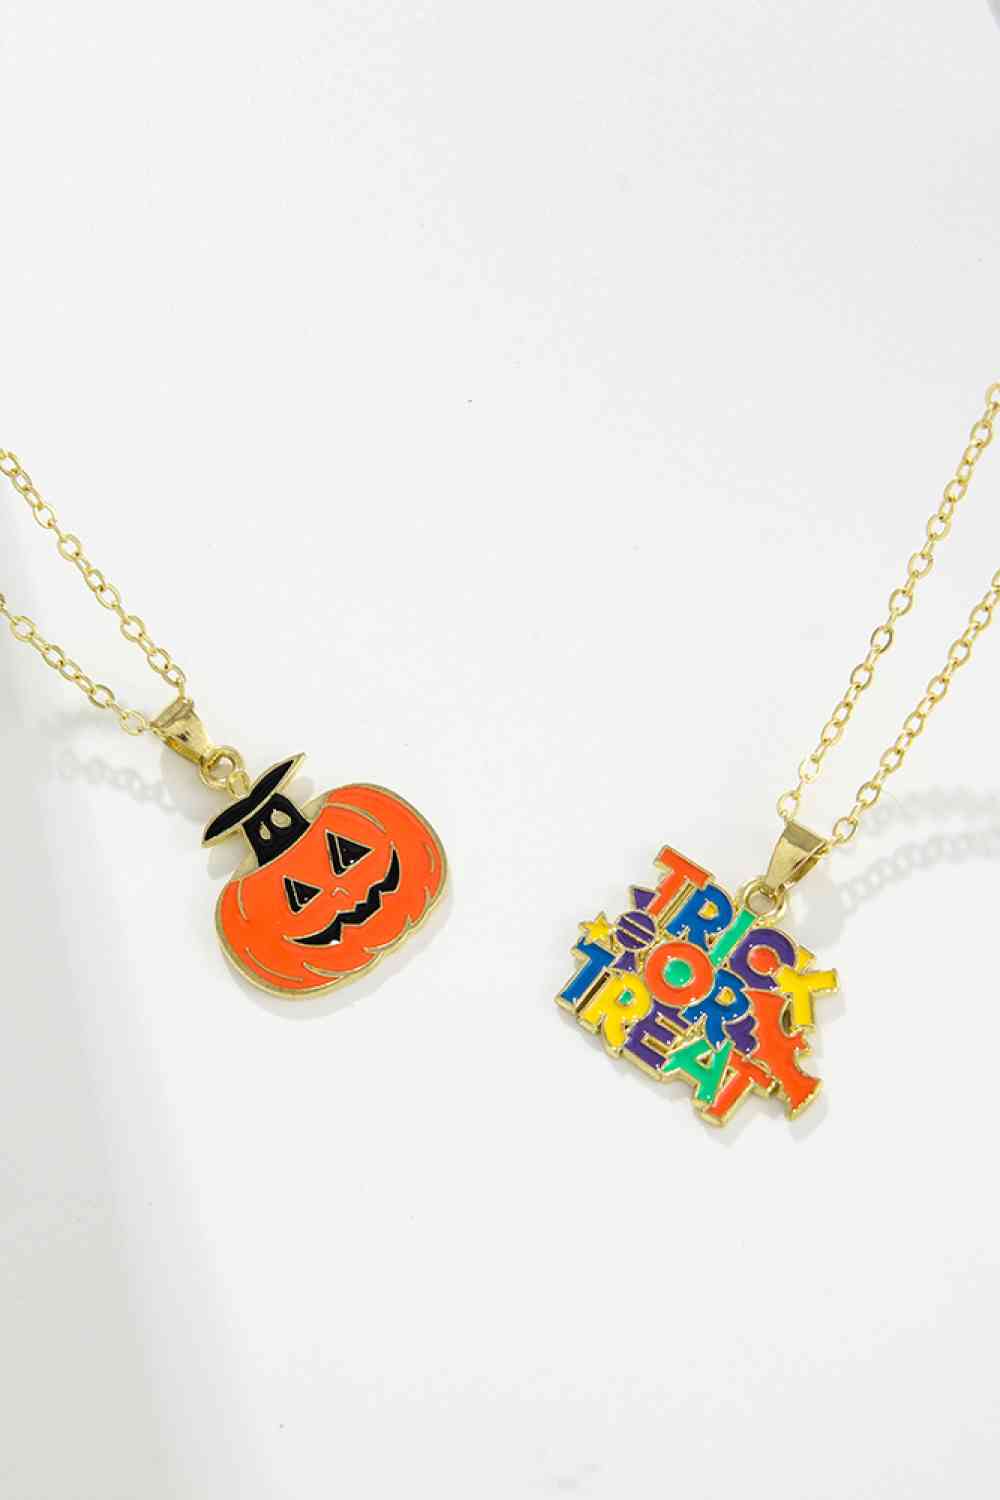 Two-Piece Halloween Theme Necklace Set, MyriadMart